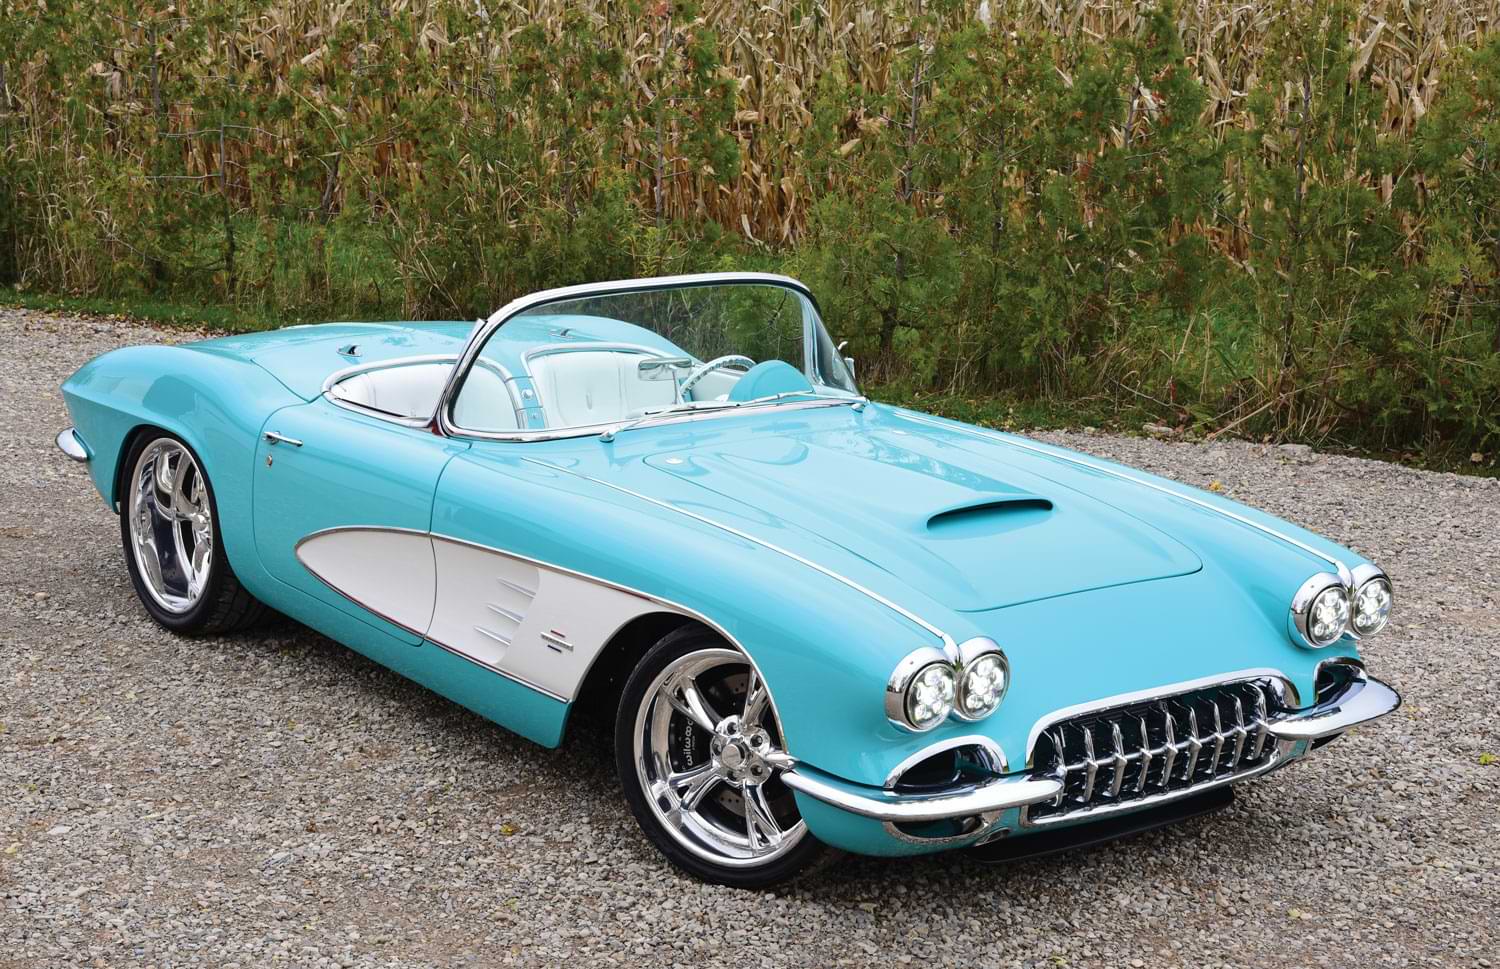 Shawn Freer’s 1961 Corvette profile